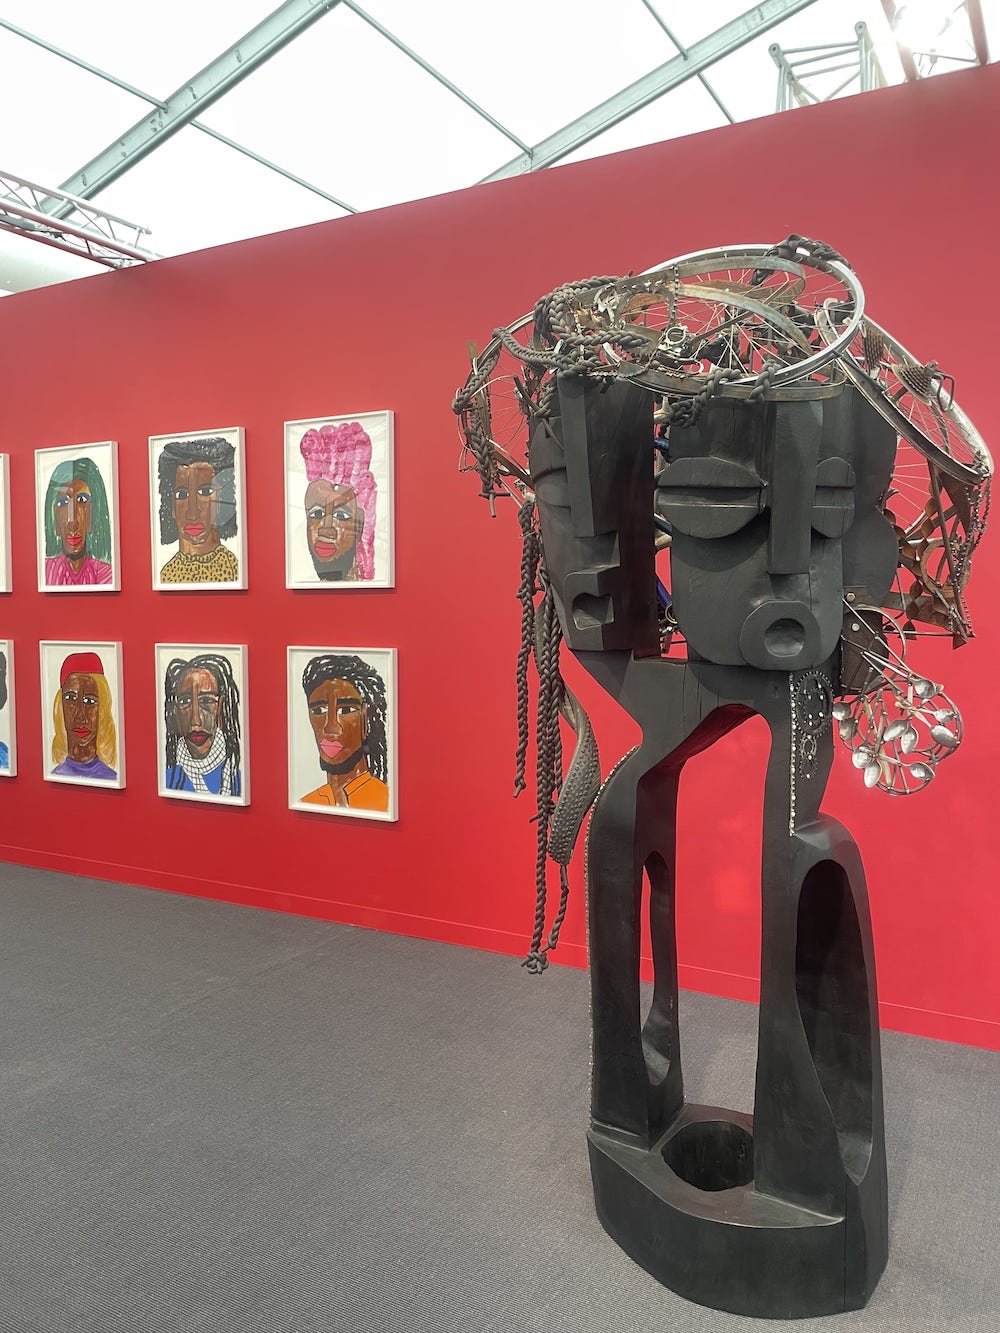 Stephen Friedman Gallery presents Leilah Babirye at Frieze London